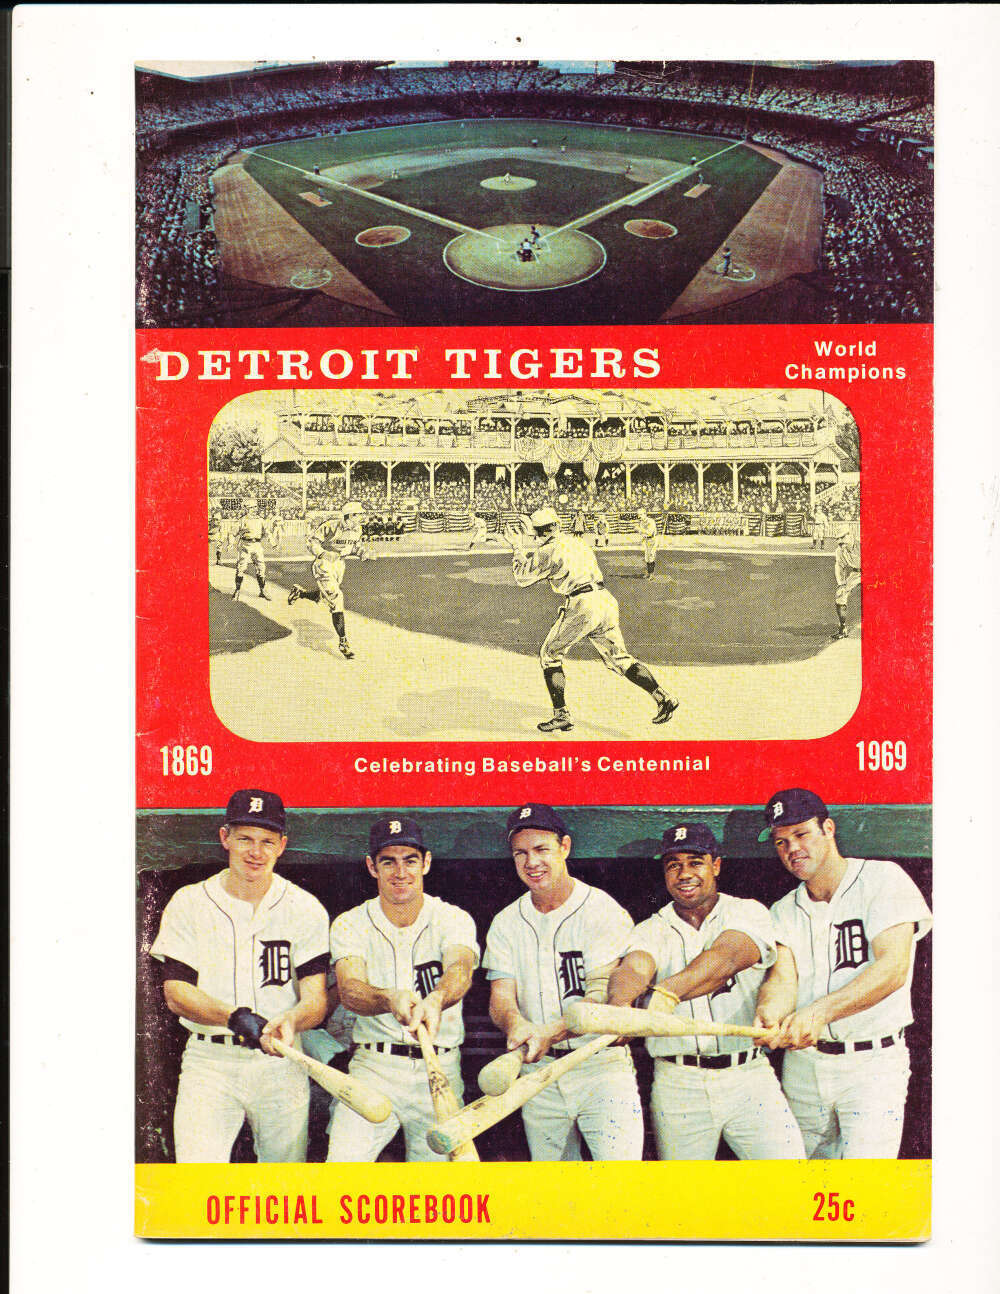 1969 Detroit Tigers vs Oakland Athletics baseball program bx4.24 em